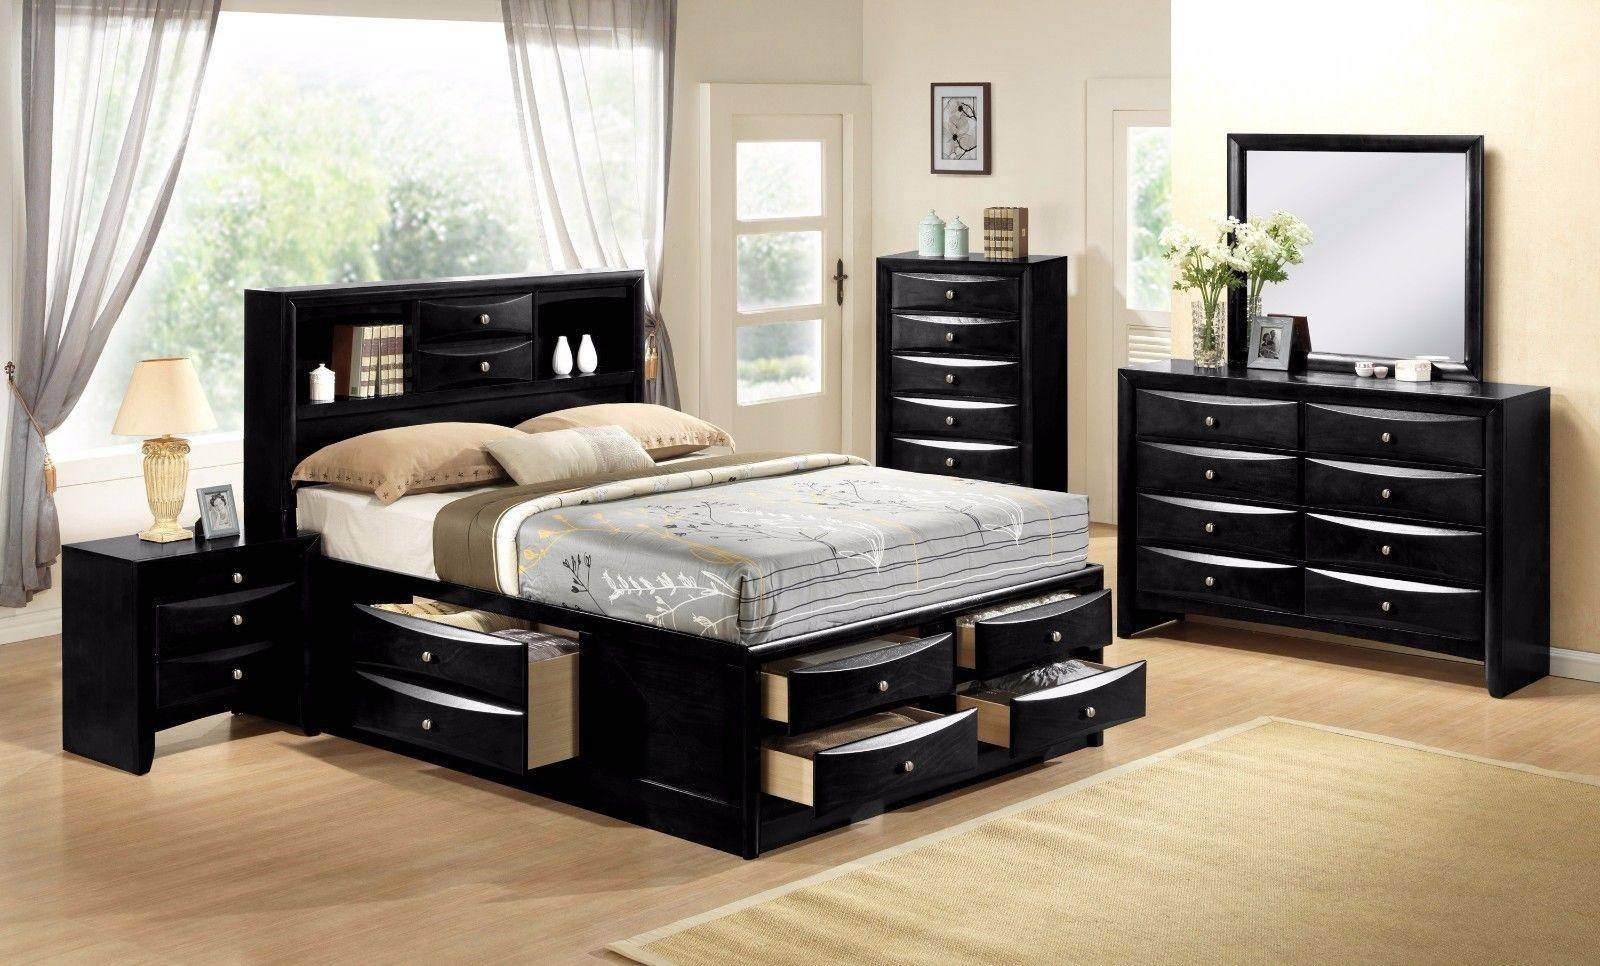 Black and Silver Bedroom Set Luxury Crown Mark B4285 Emily Modern Black Finish Storage King Size